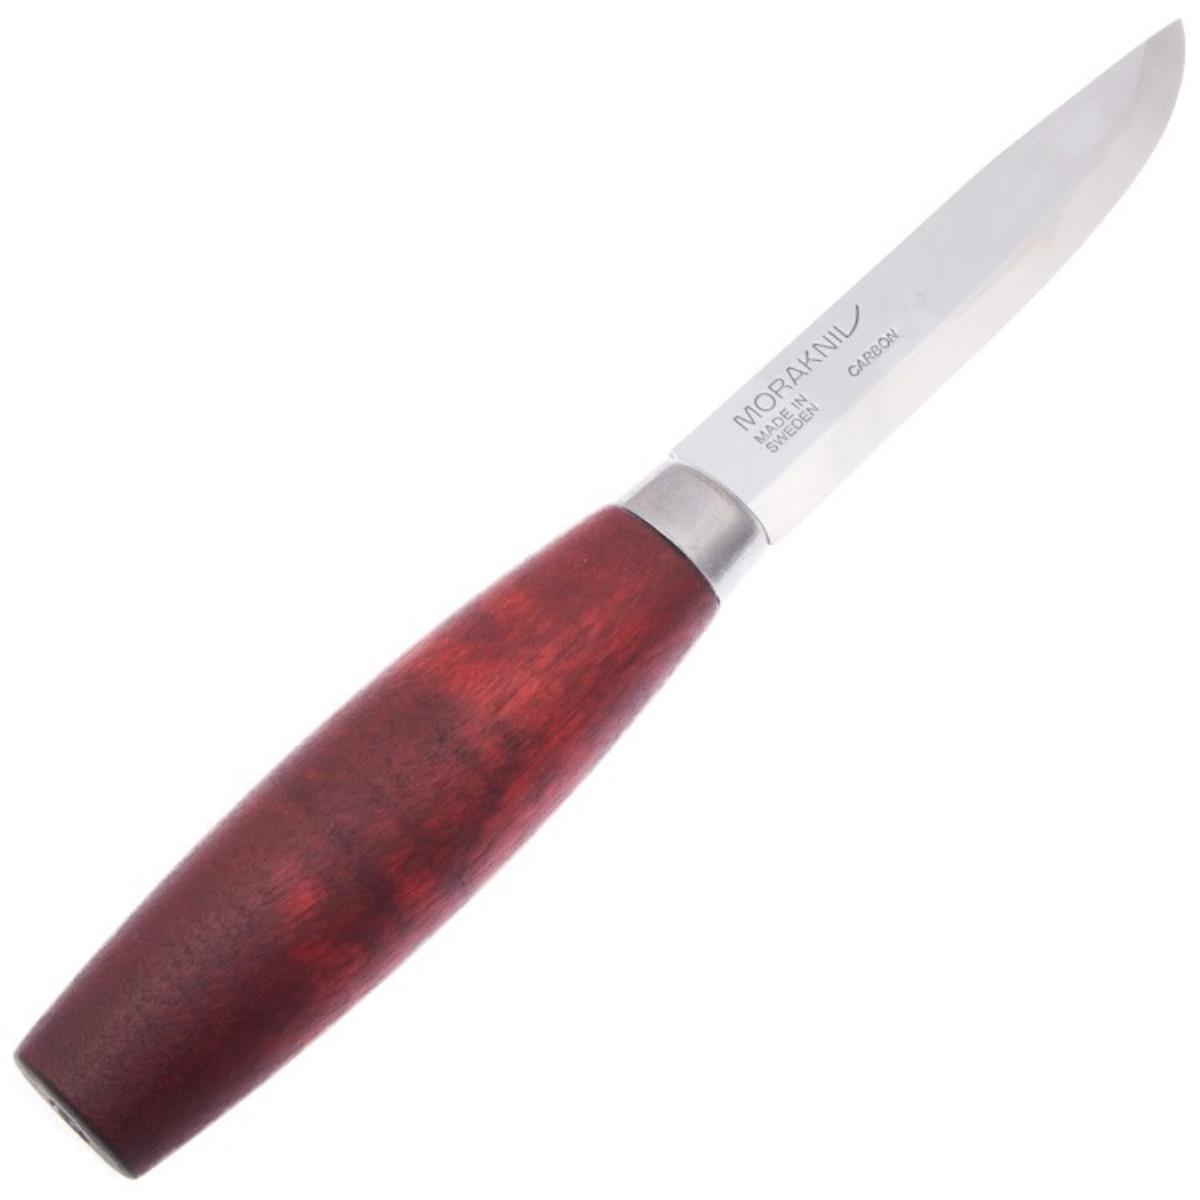 Нож Classic 1/0 (13603) Morakniv нож kniv craftline q allround 0711 11481 morakniv